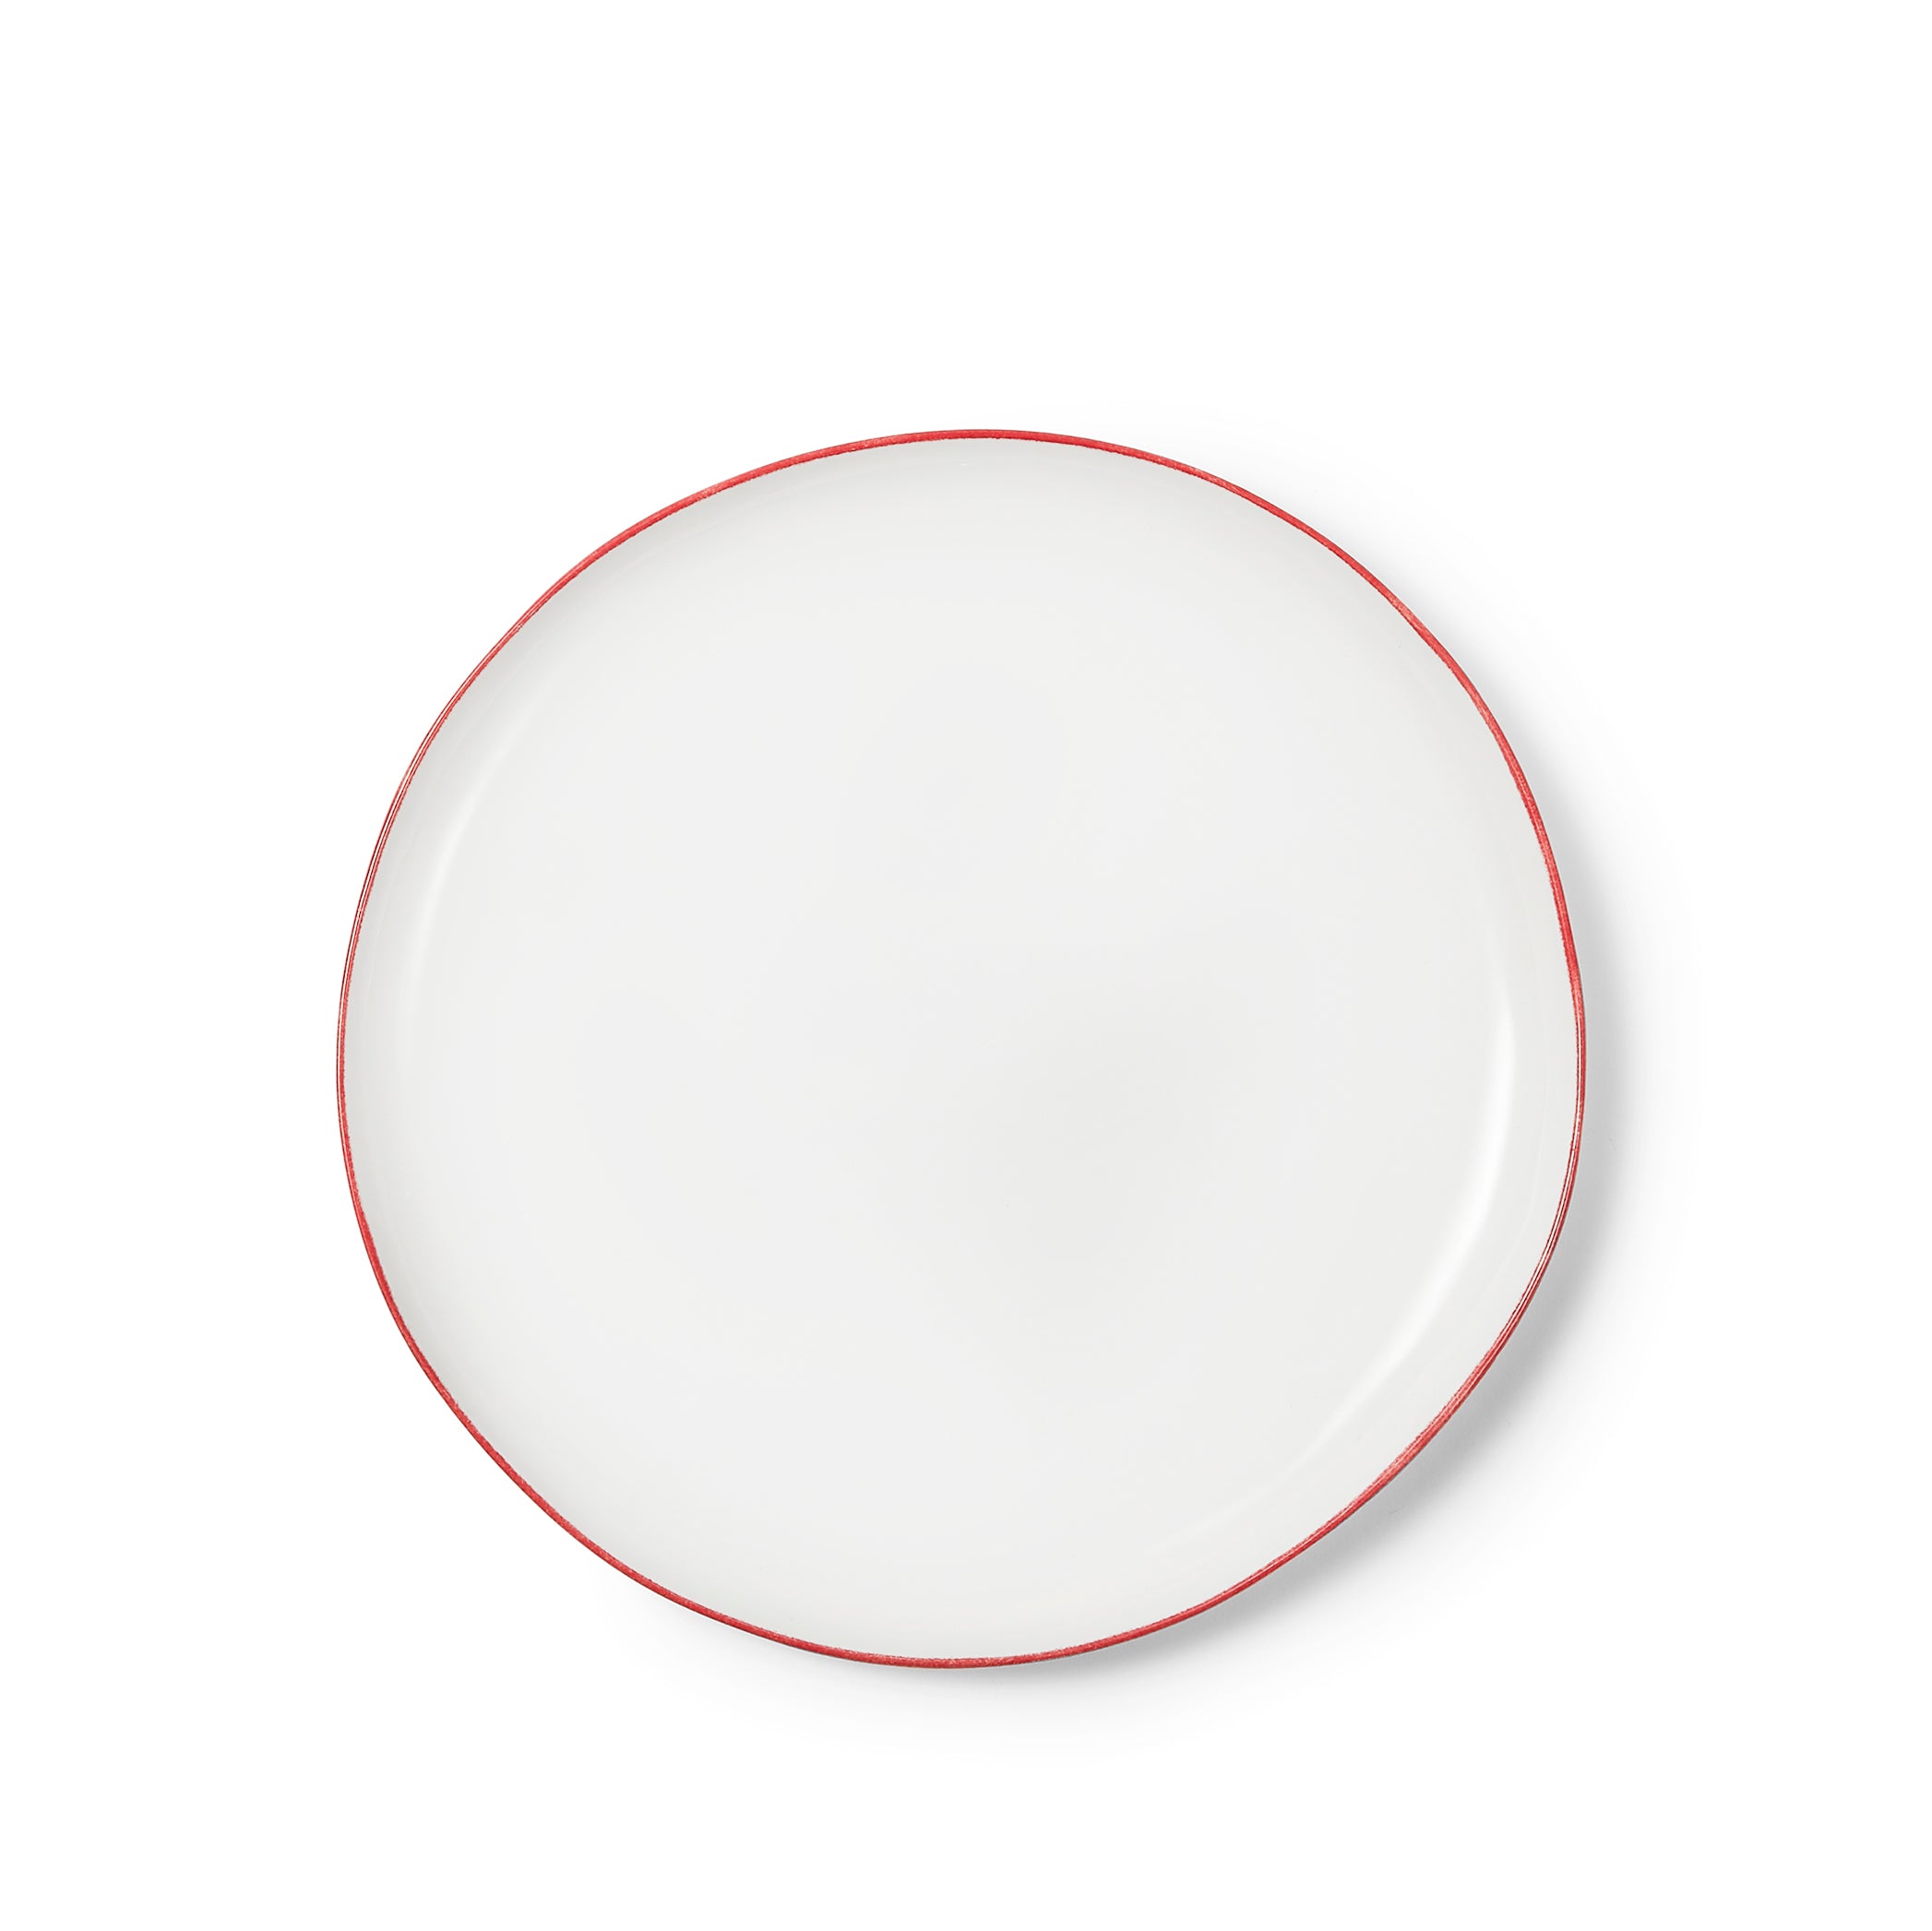 Made to order - Summerill & Bishop Handmade 31cm Porcelain Dinner Plate with Pink Rim